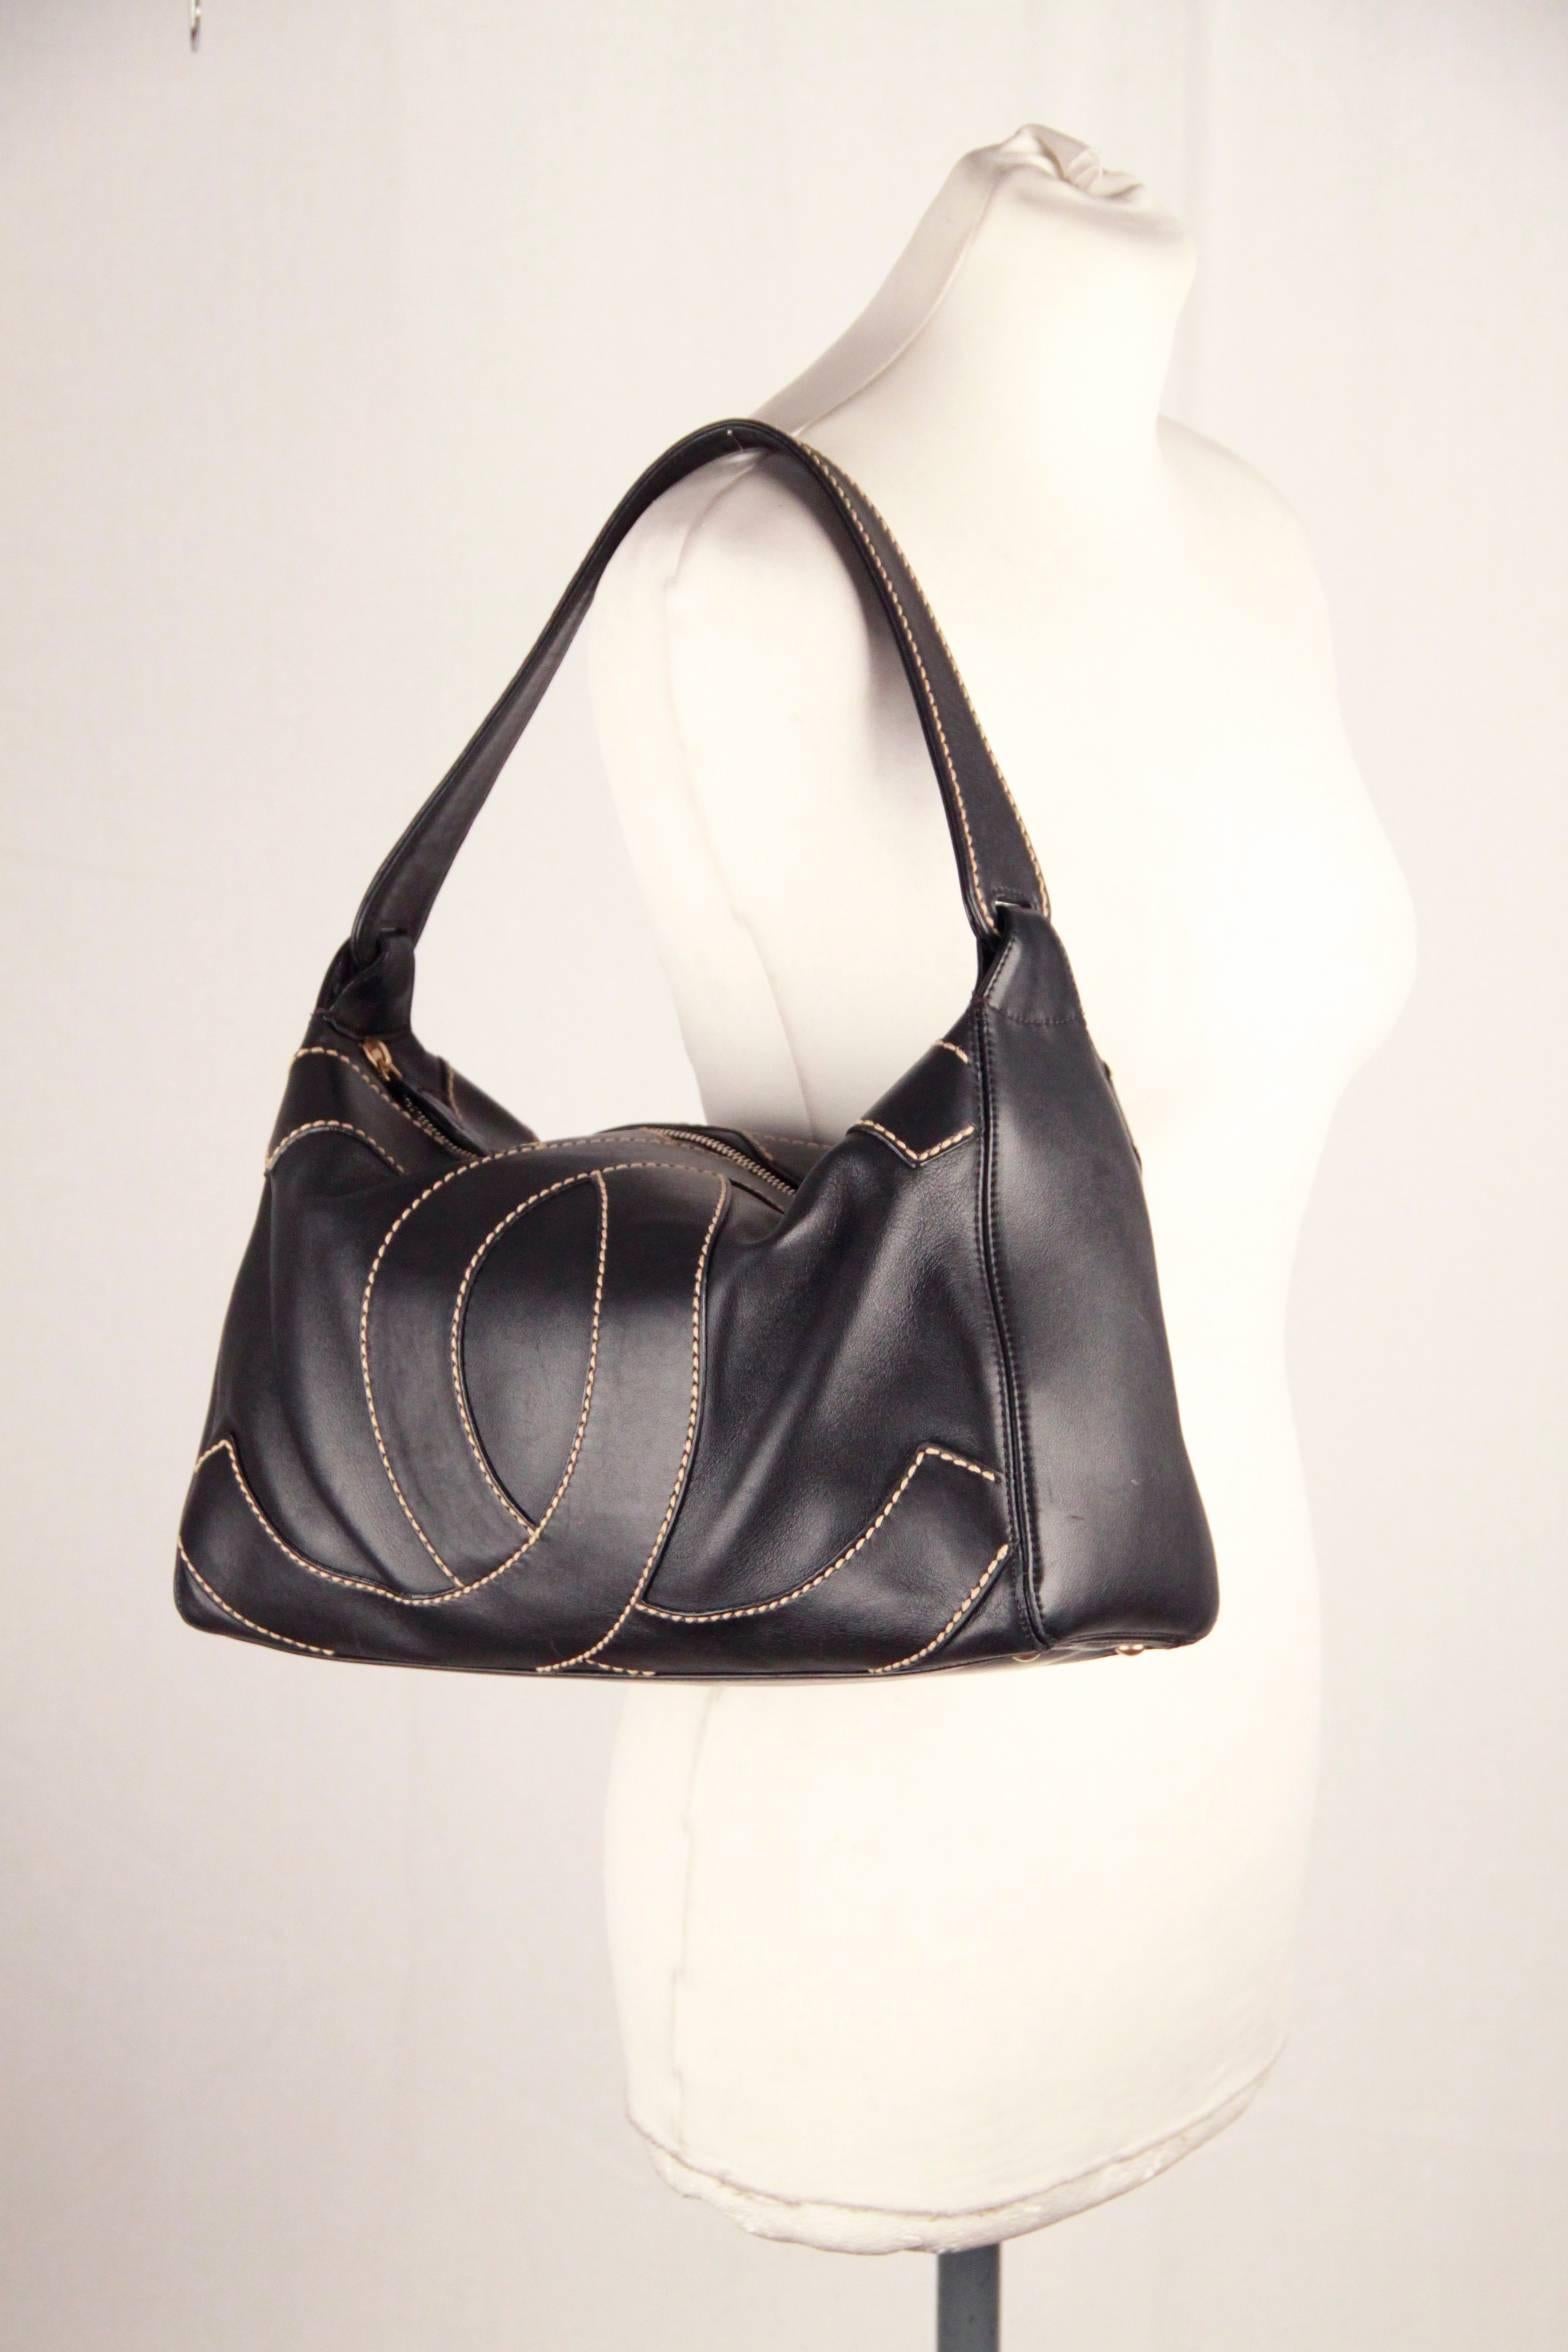 Women's CHANEL Black Leather BIG STITCHED CC Shoulder Bag